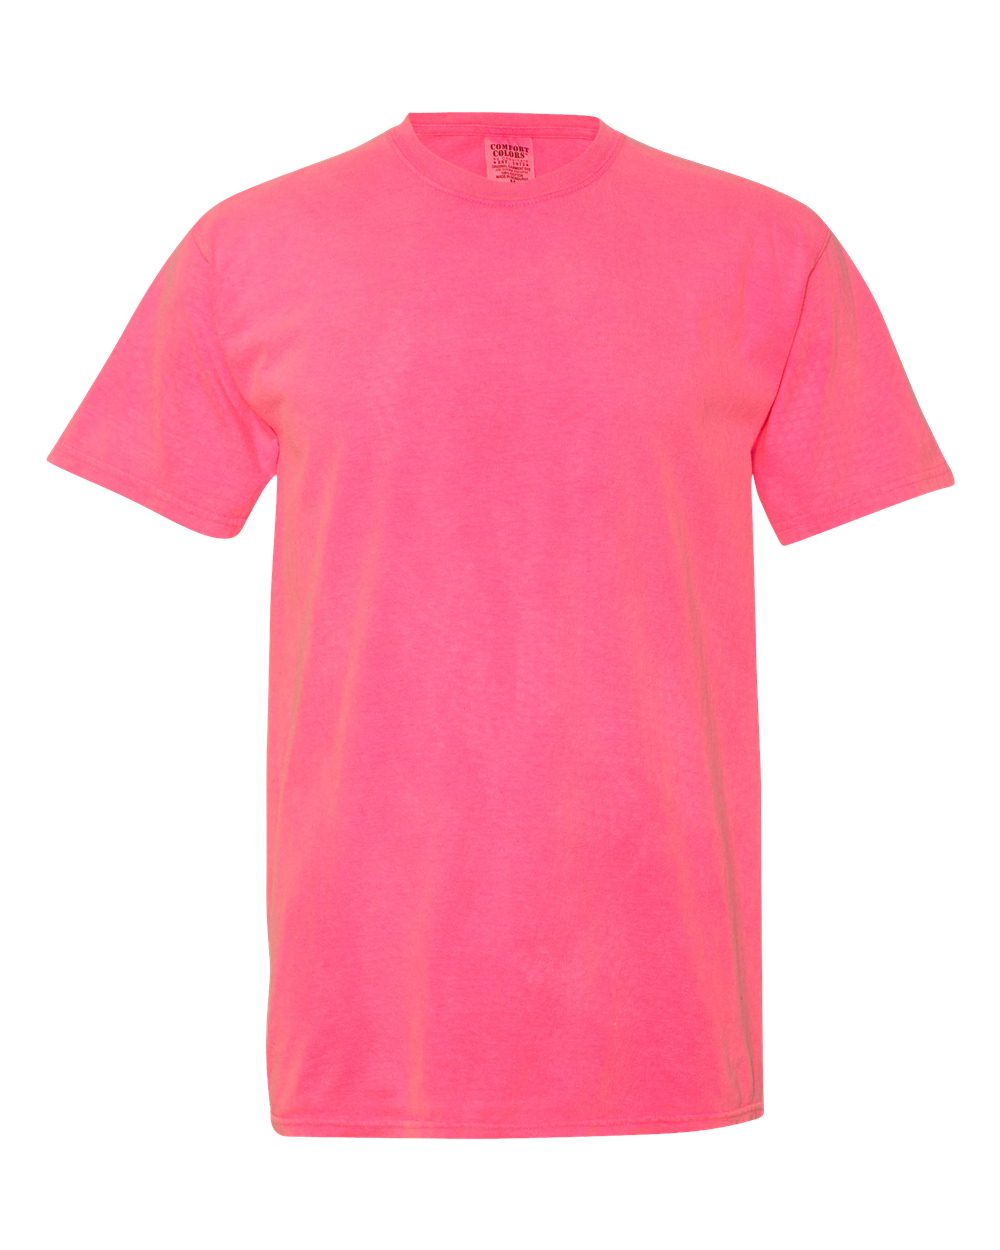 Comfort Colors Garment-Dyed Tee (1717) in Neon Pink